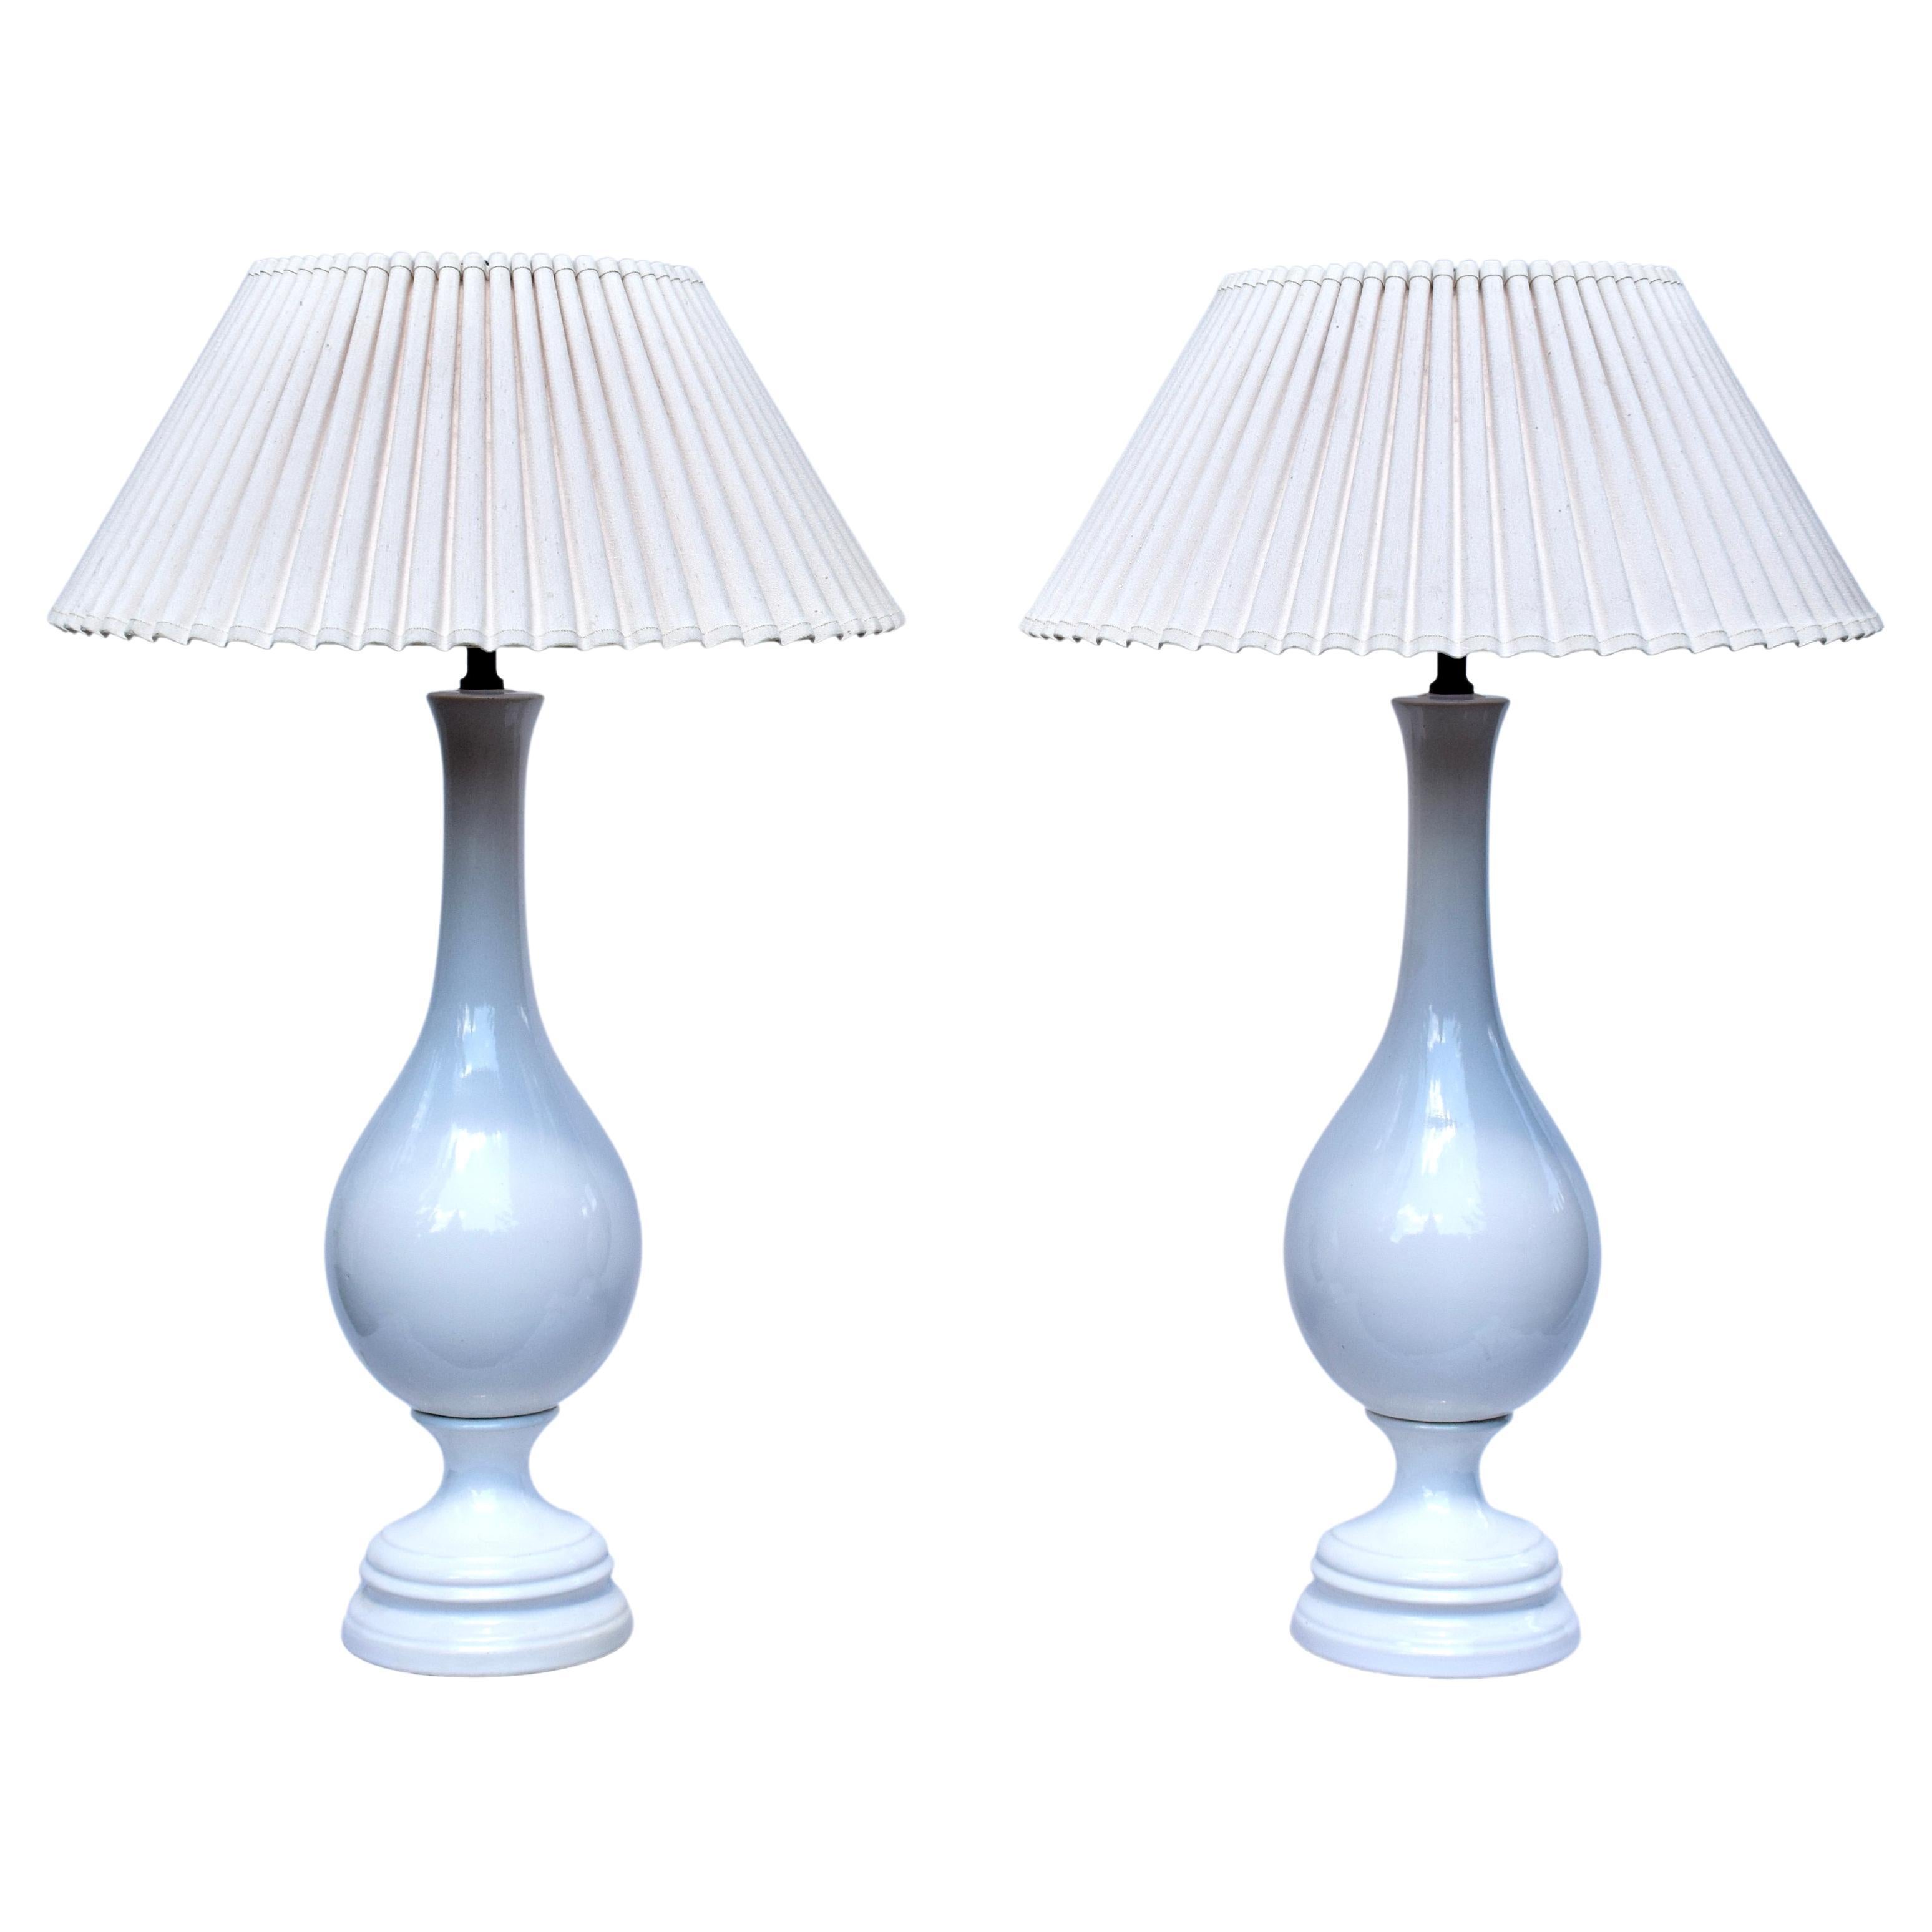 Mid 20th Century White Porcelain Vase Table Lamps, Pair For Sale